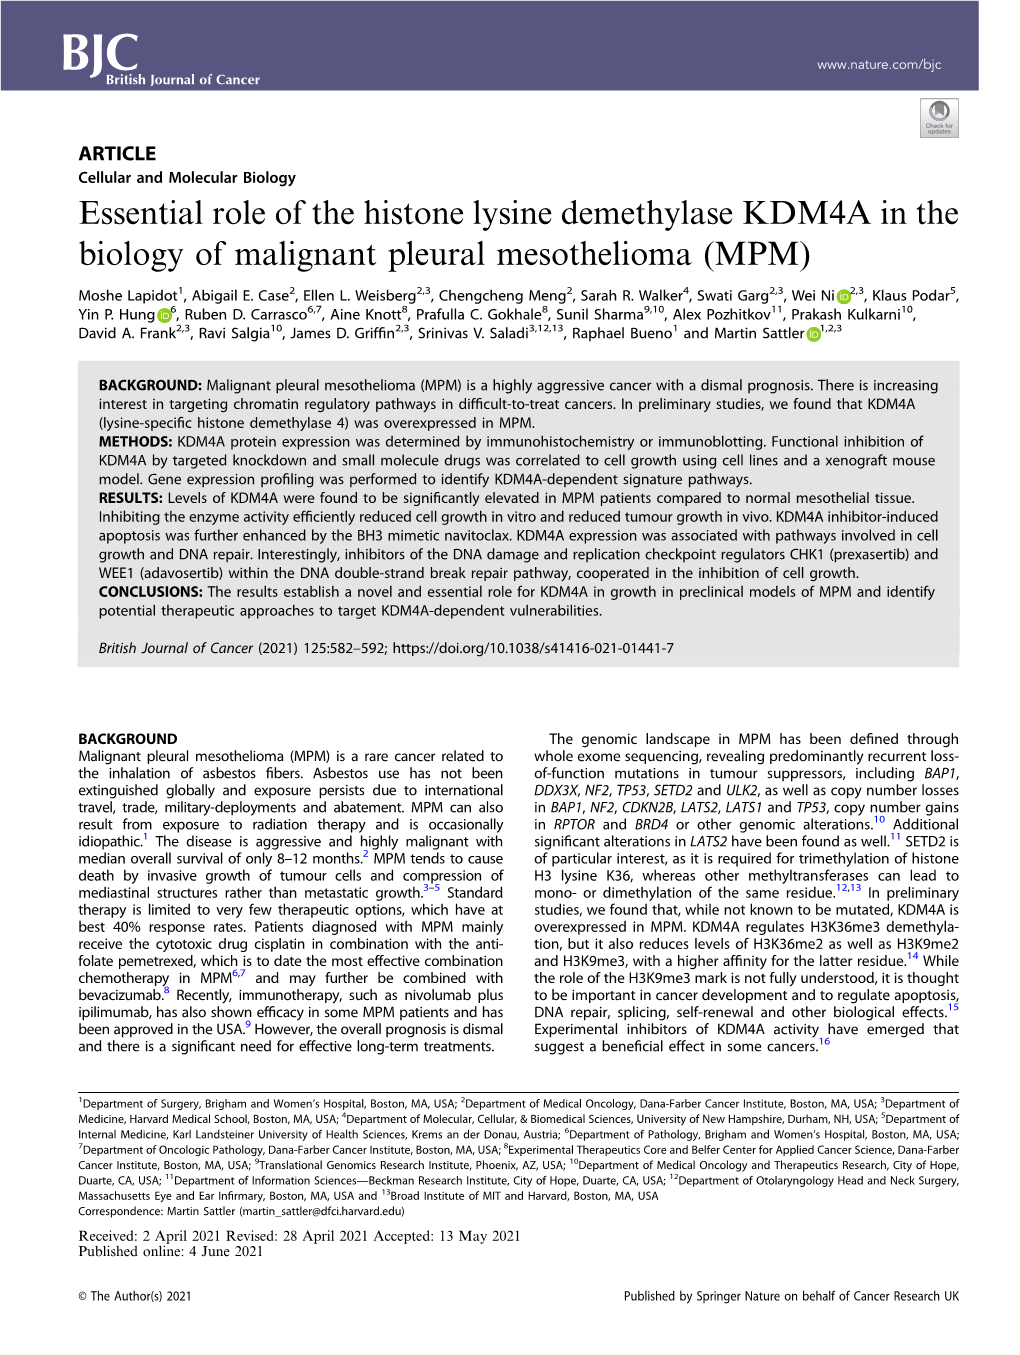 Essential Role of the Histone Lysine Demethylase KDM4A in the Biology of Malignant Pleural Mesothelioma (MPM)